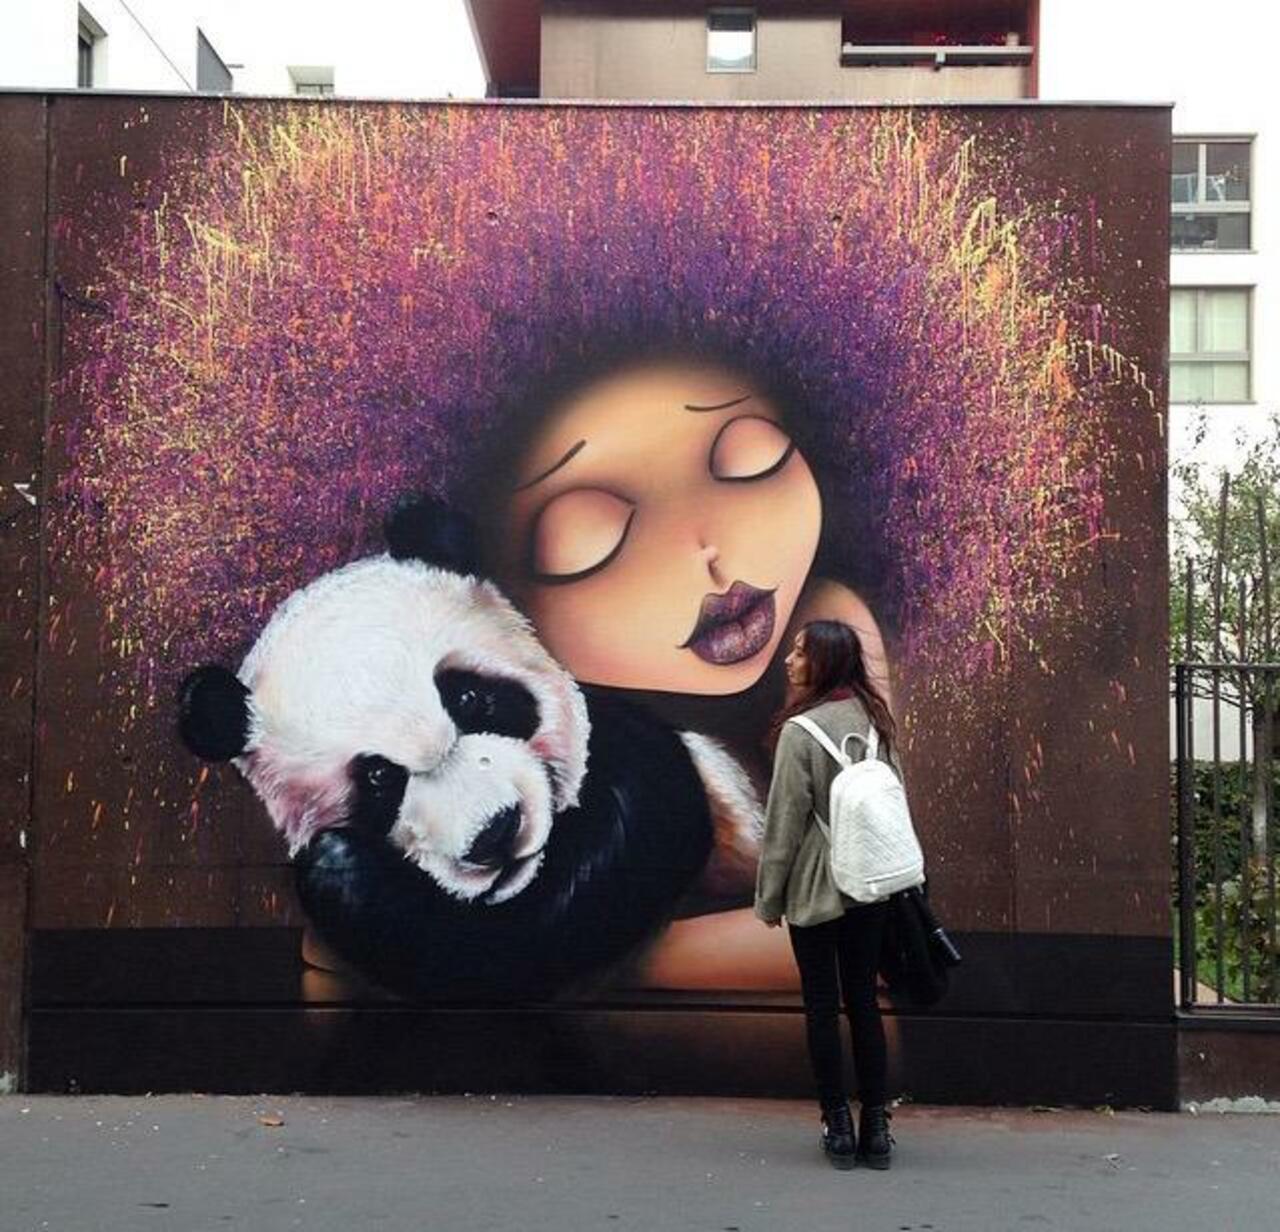 RT @jpaine: Street Art by VinieGraffiti in Paris 

#art #graffiti #mural #streetart http://t.co/Tvpdzh61np